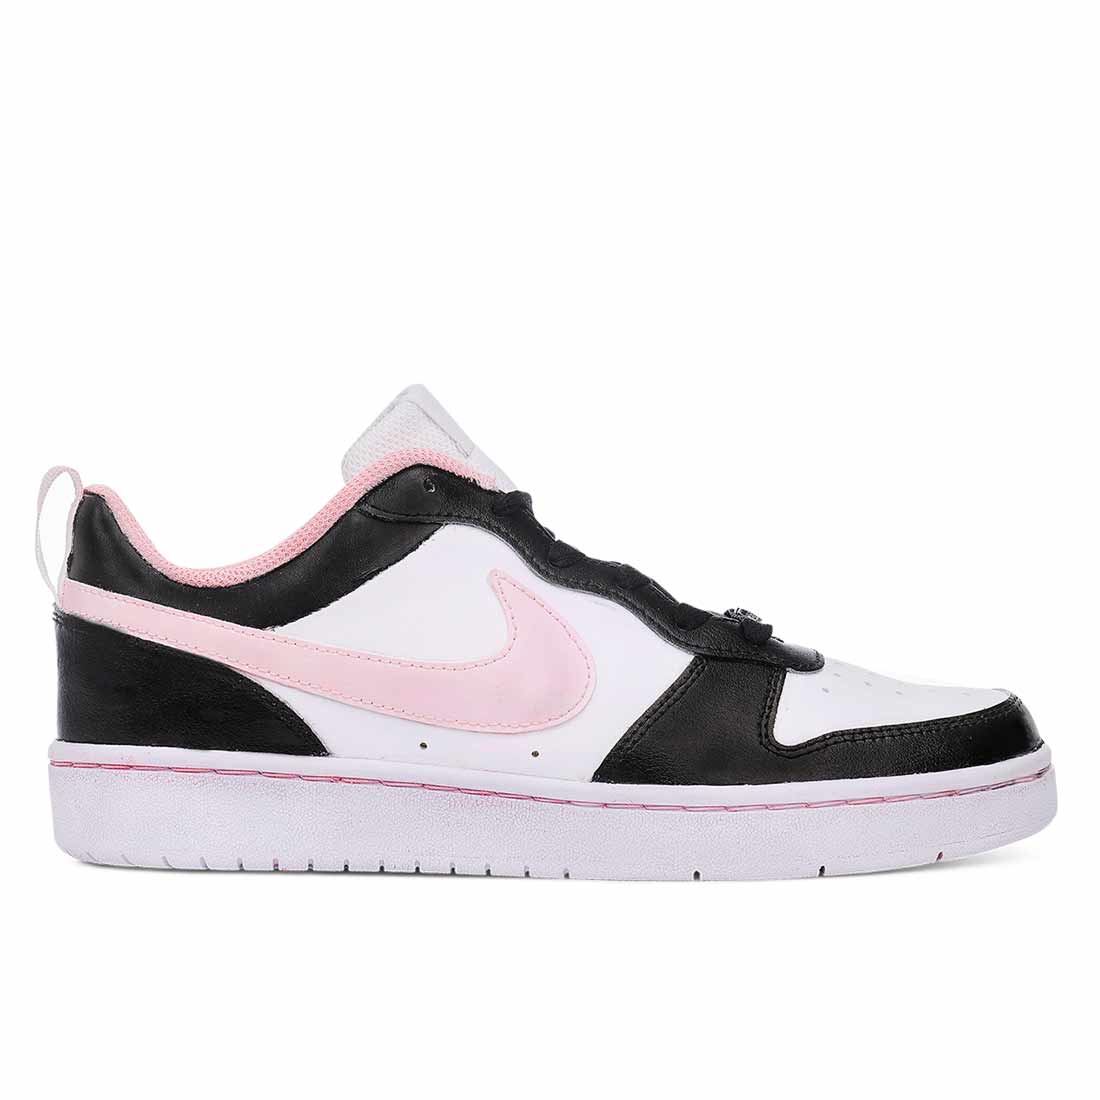 Nike court nere e rosa pastello